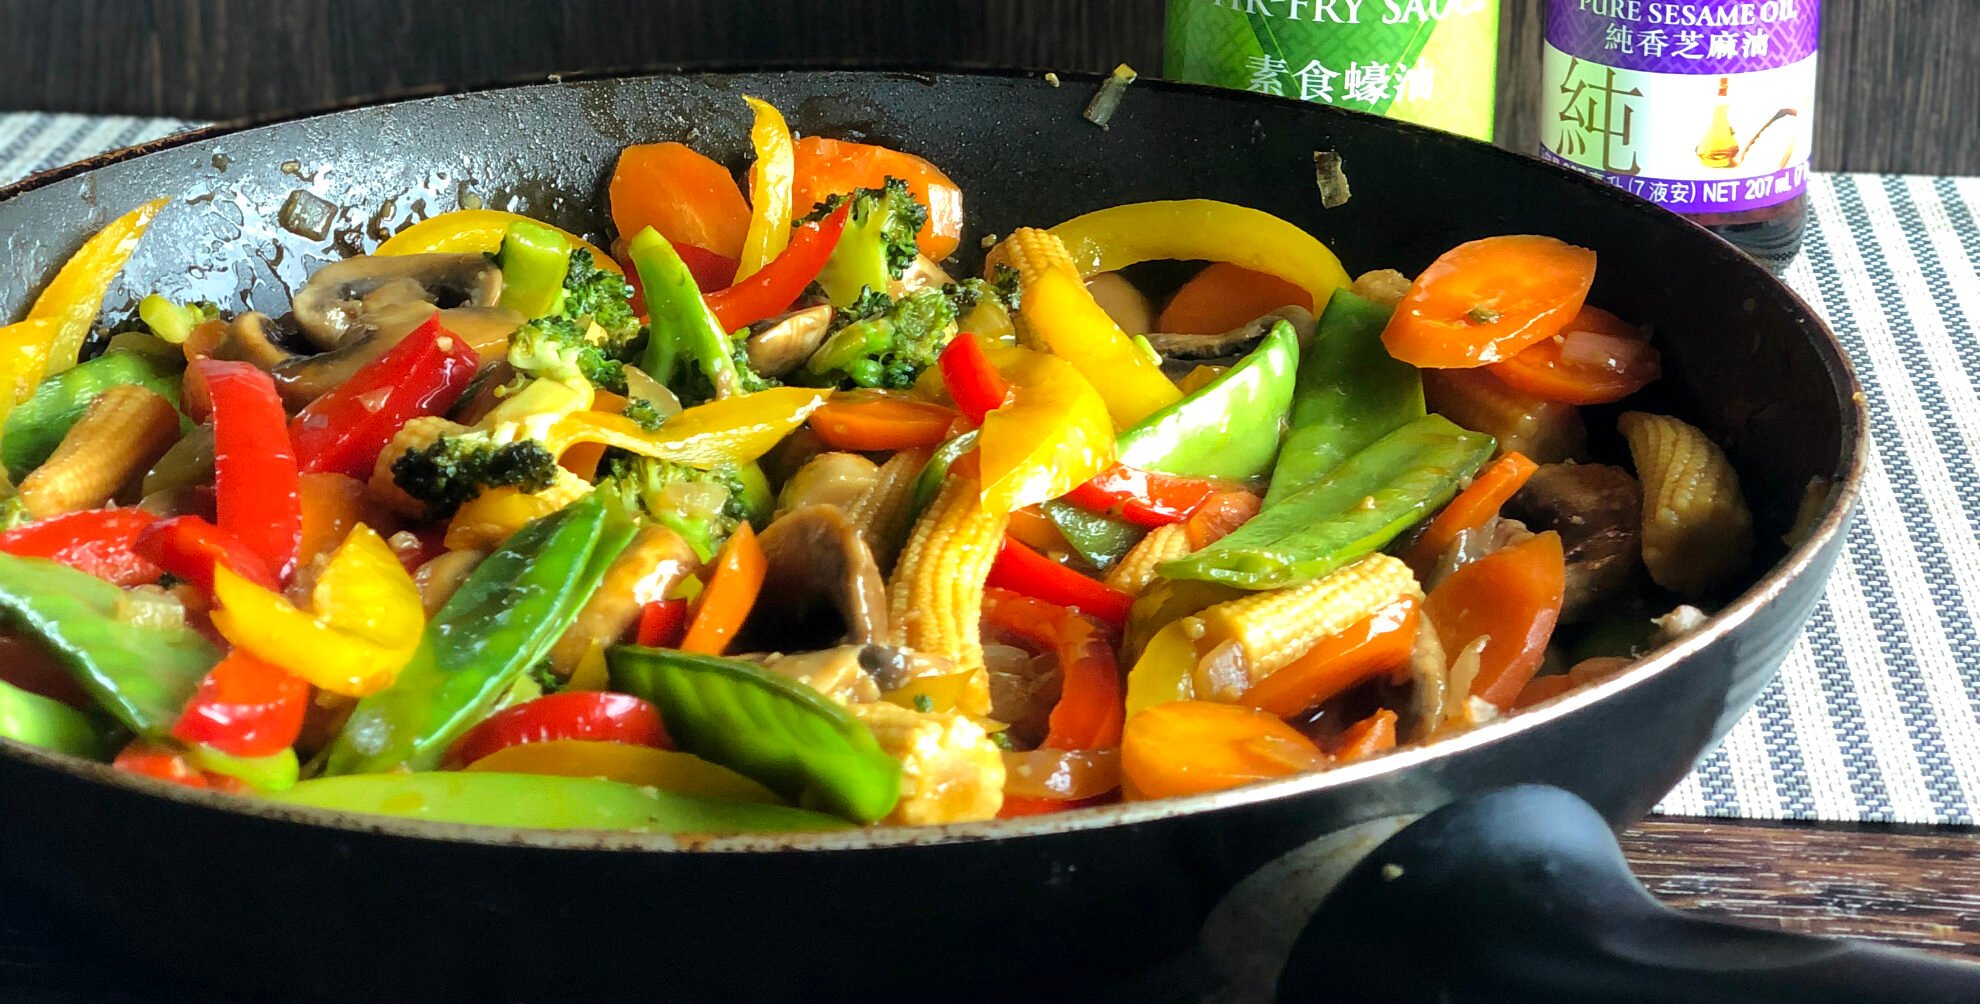 Frying pan full of stir fried vegetables